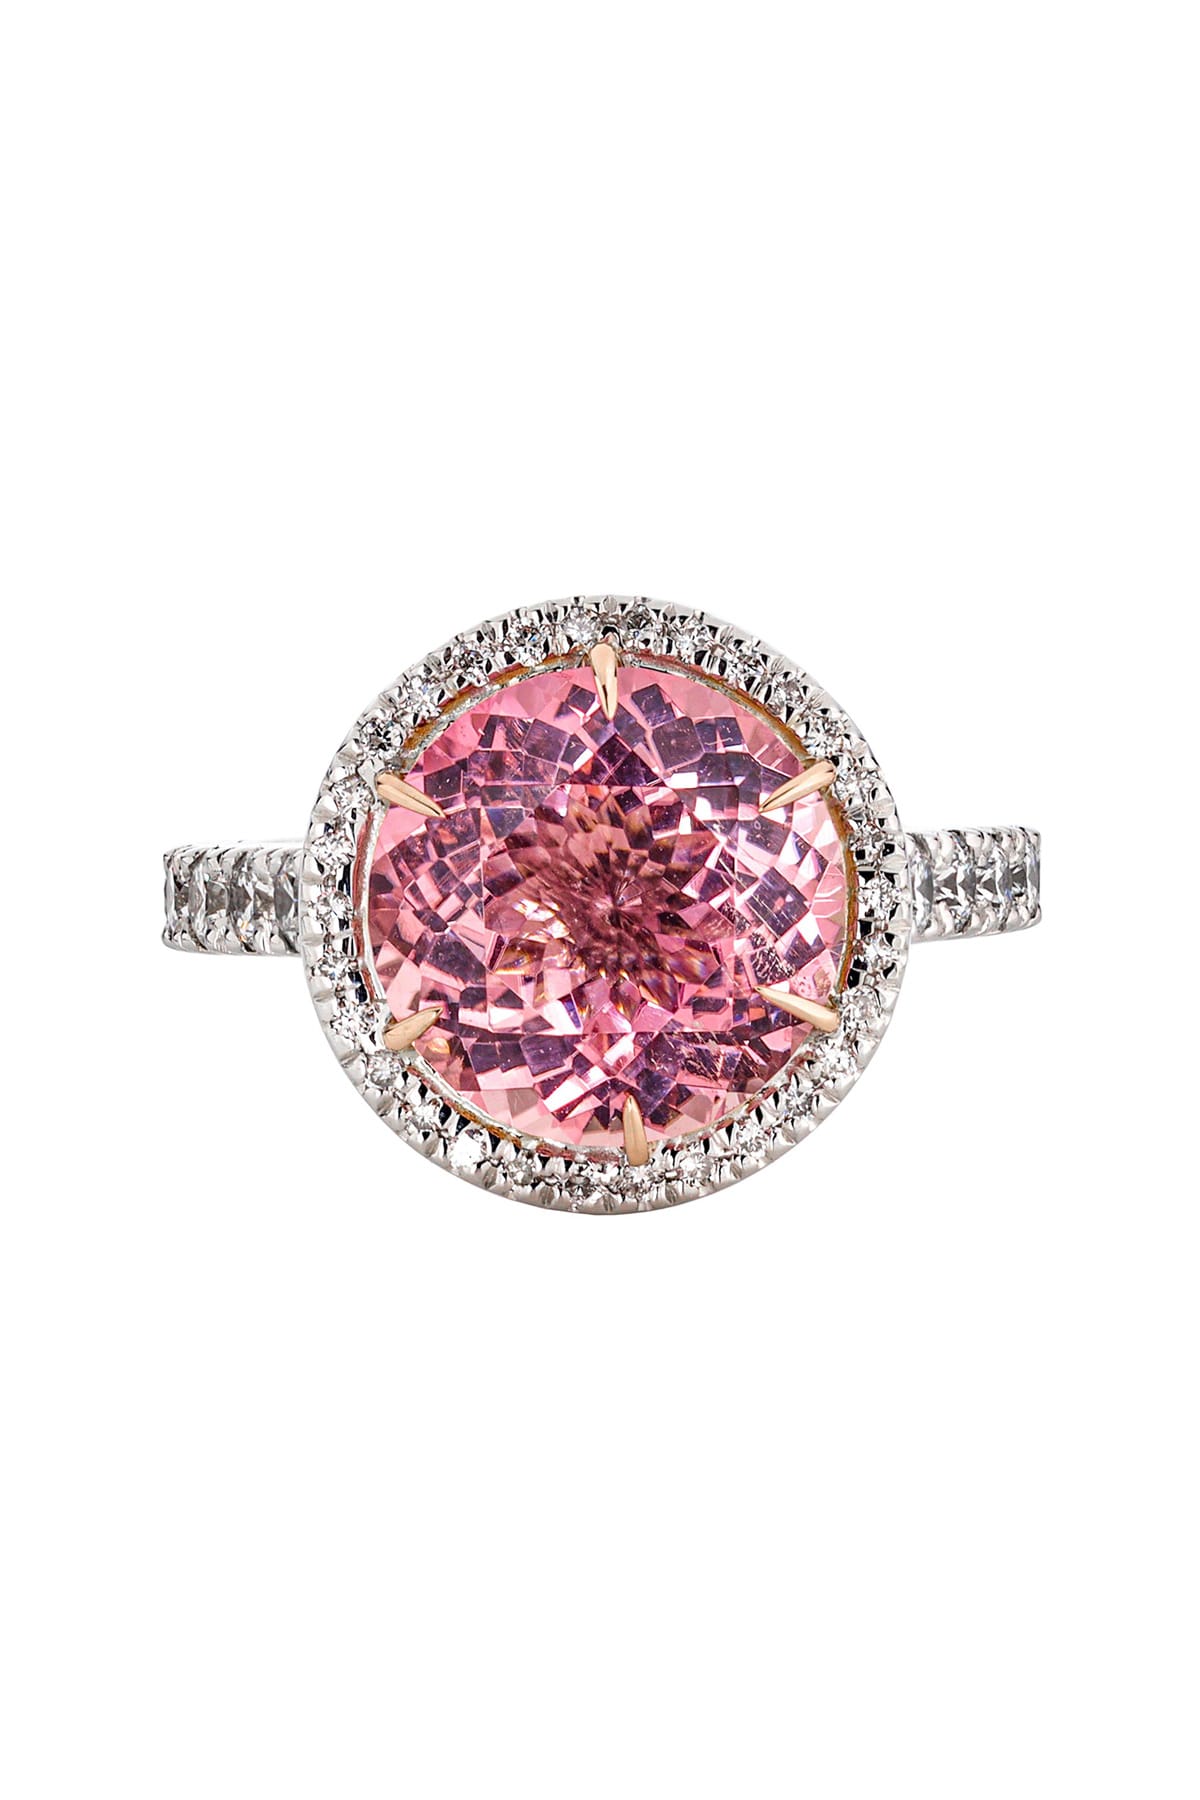 18 Carat Gold Pink Tourmaline And Diamond Halo Ring available at LeGassick Diamonds and Jewellery Gold Coast, Australia.